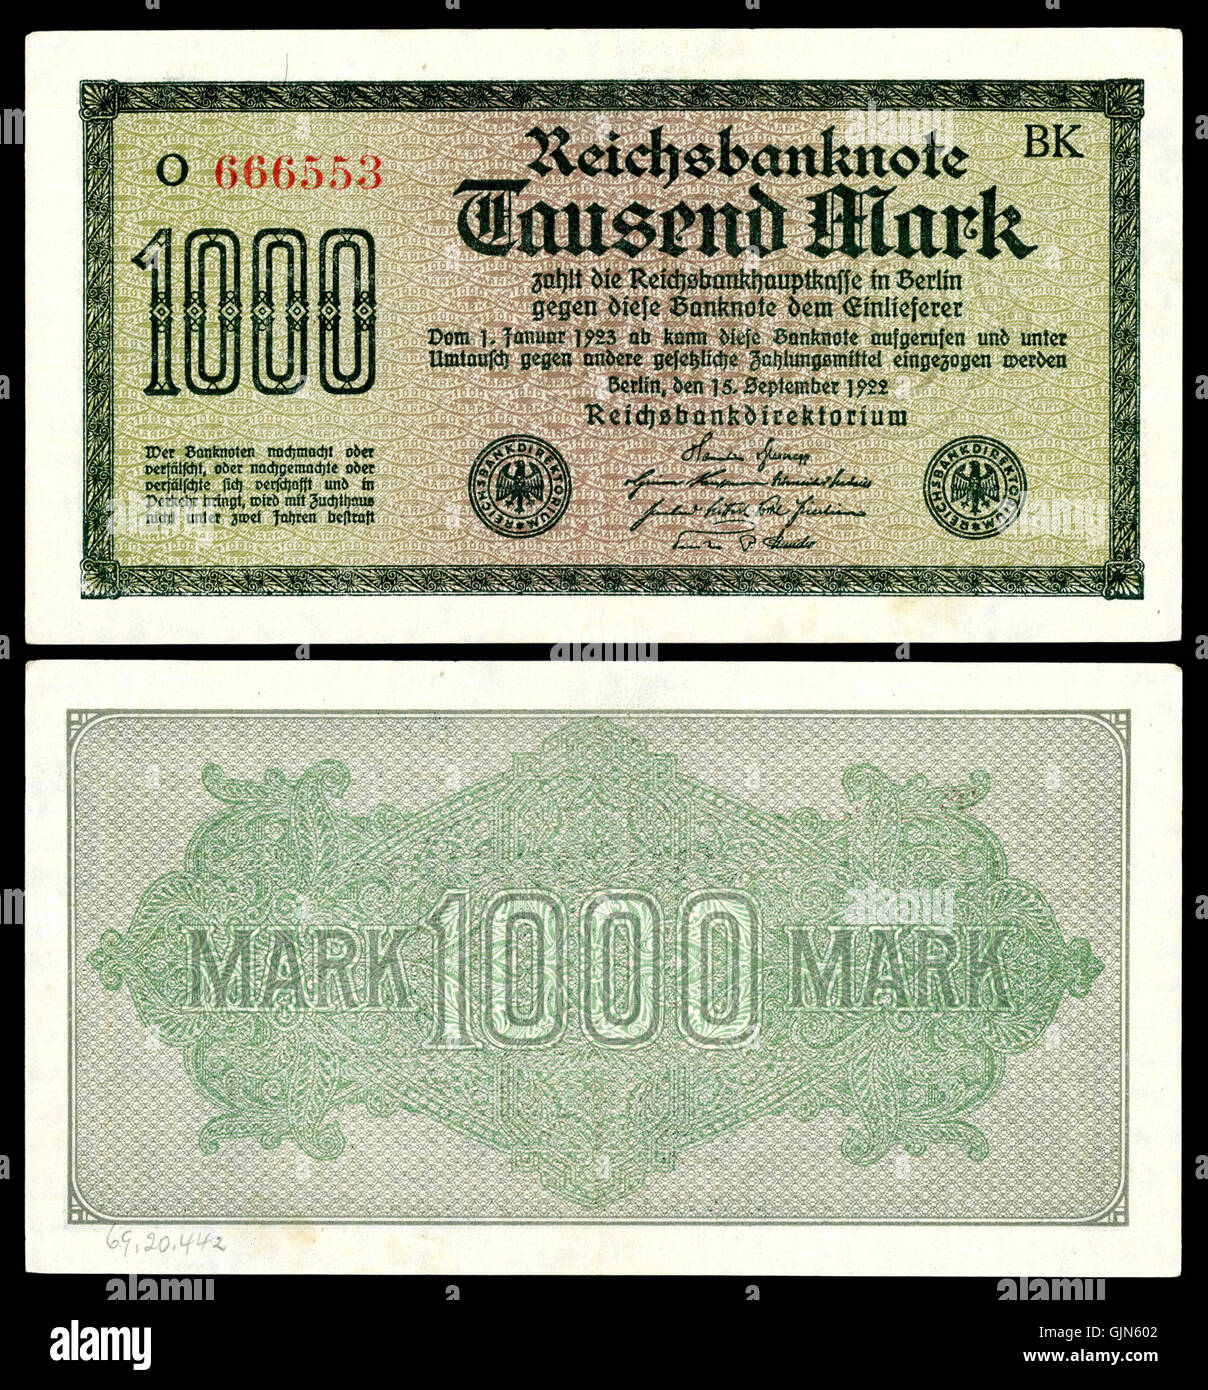 GER 76 Reichsbanknote 1000 Mark (1922 Stockfotografie - Alamy